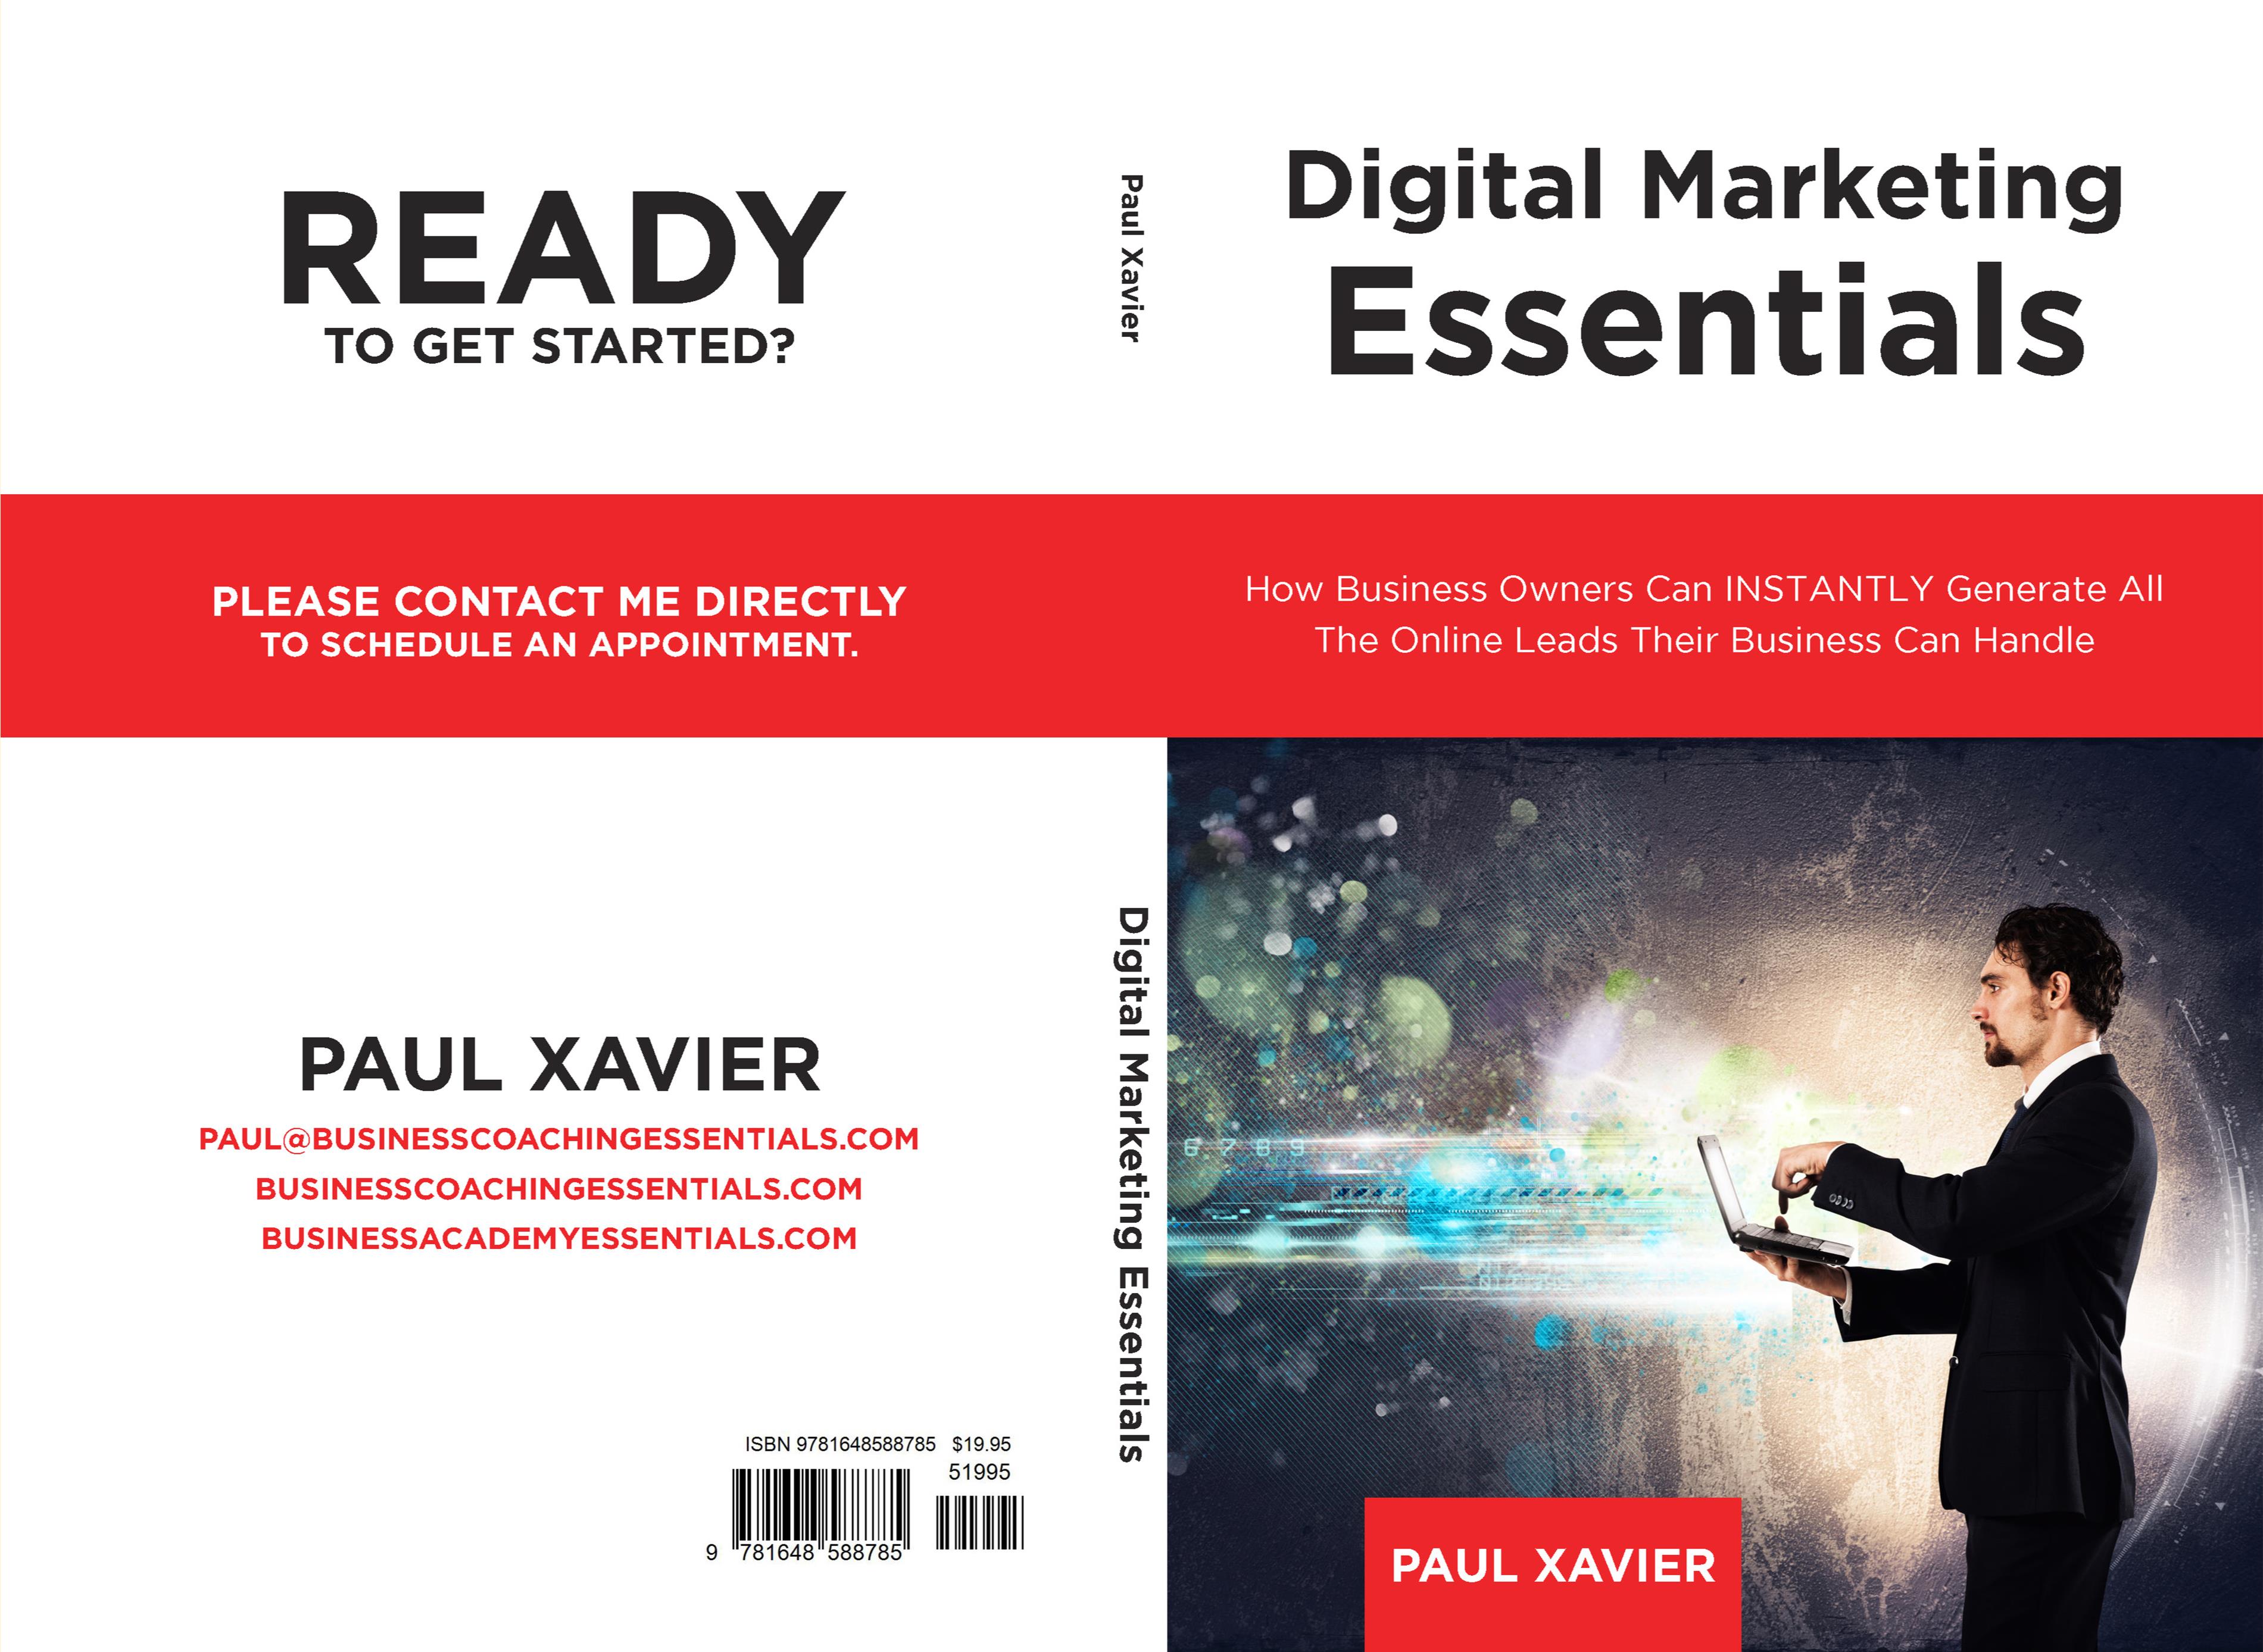 Digital Marketing Essentials cover image